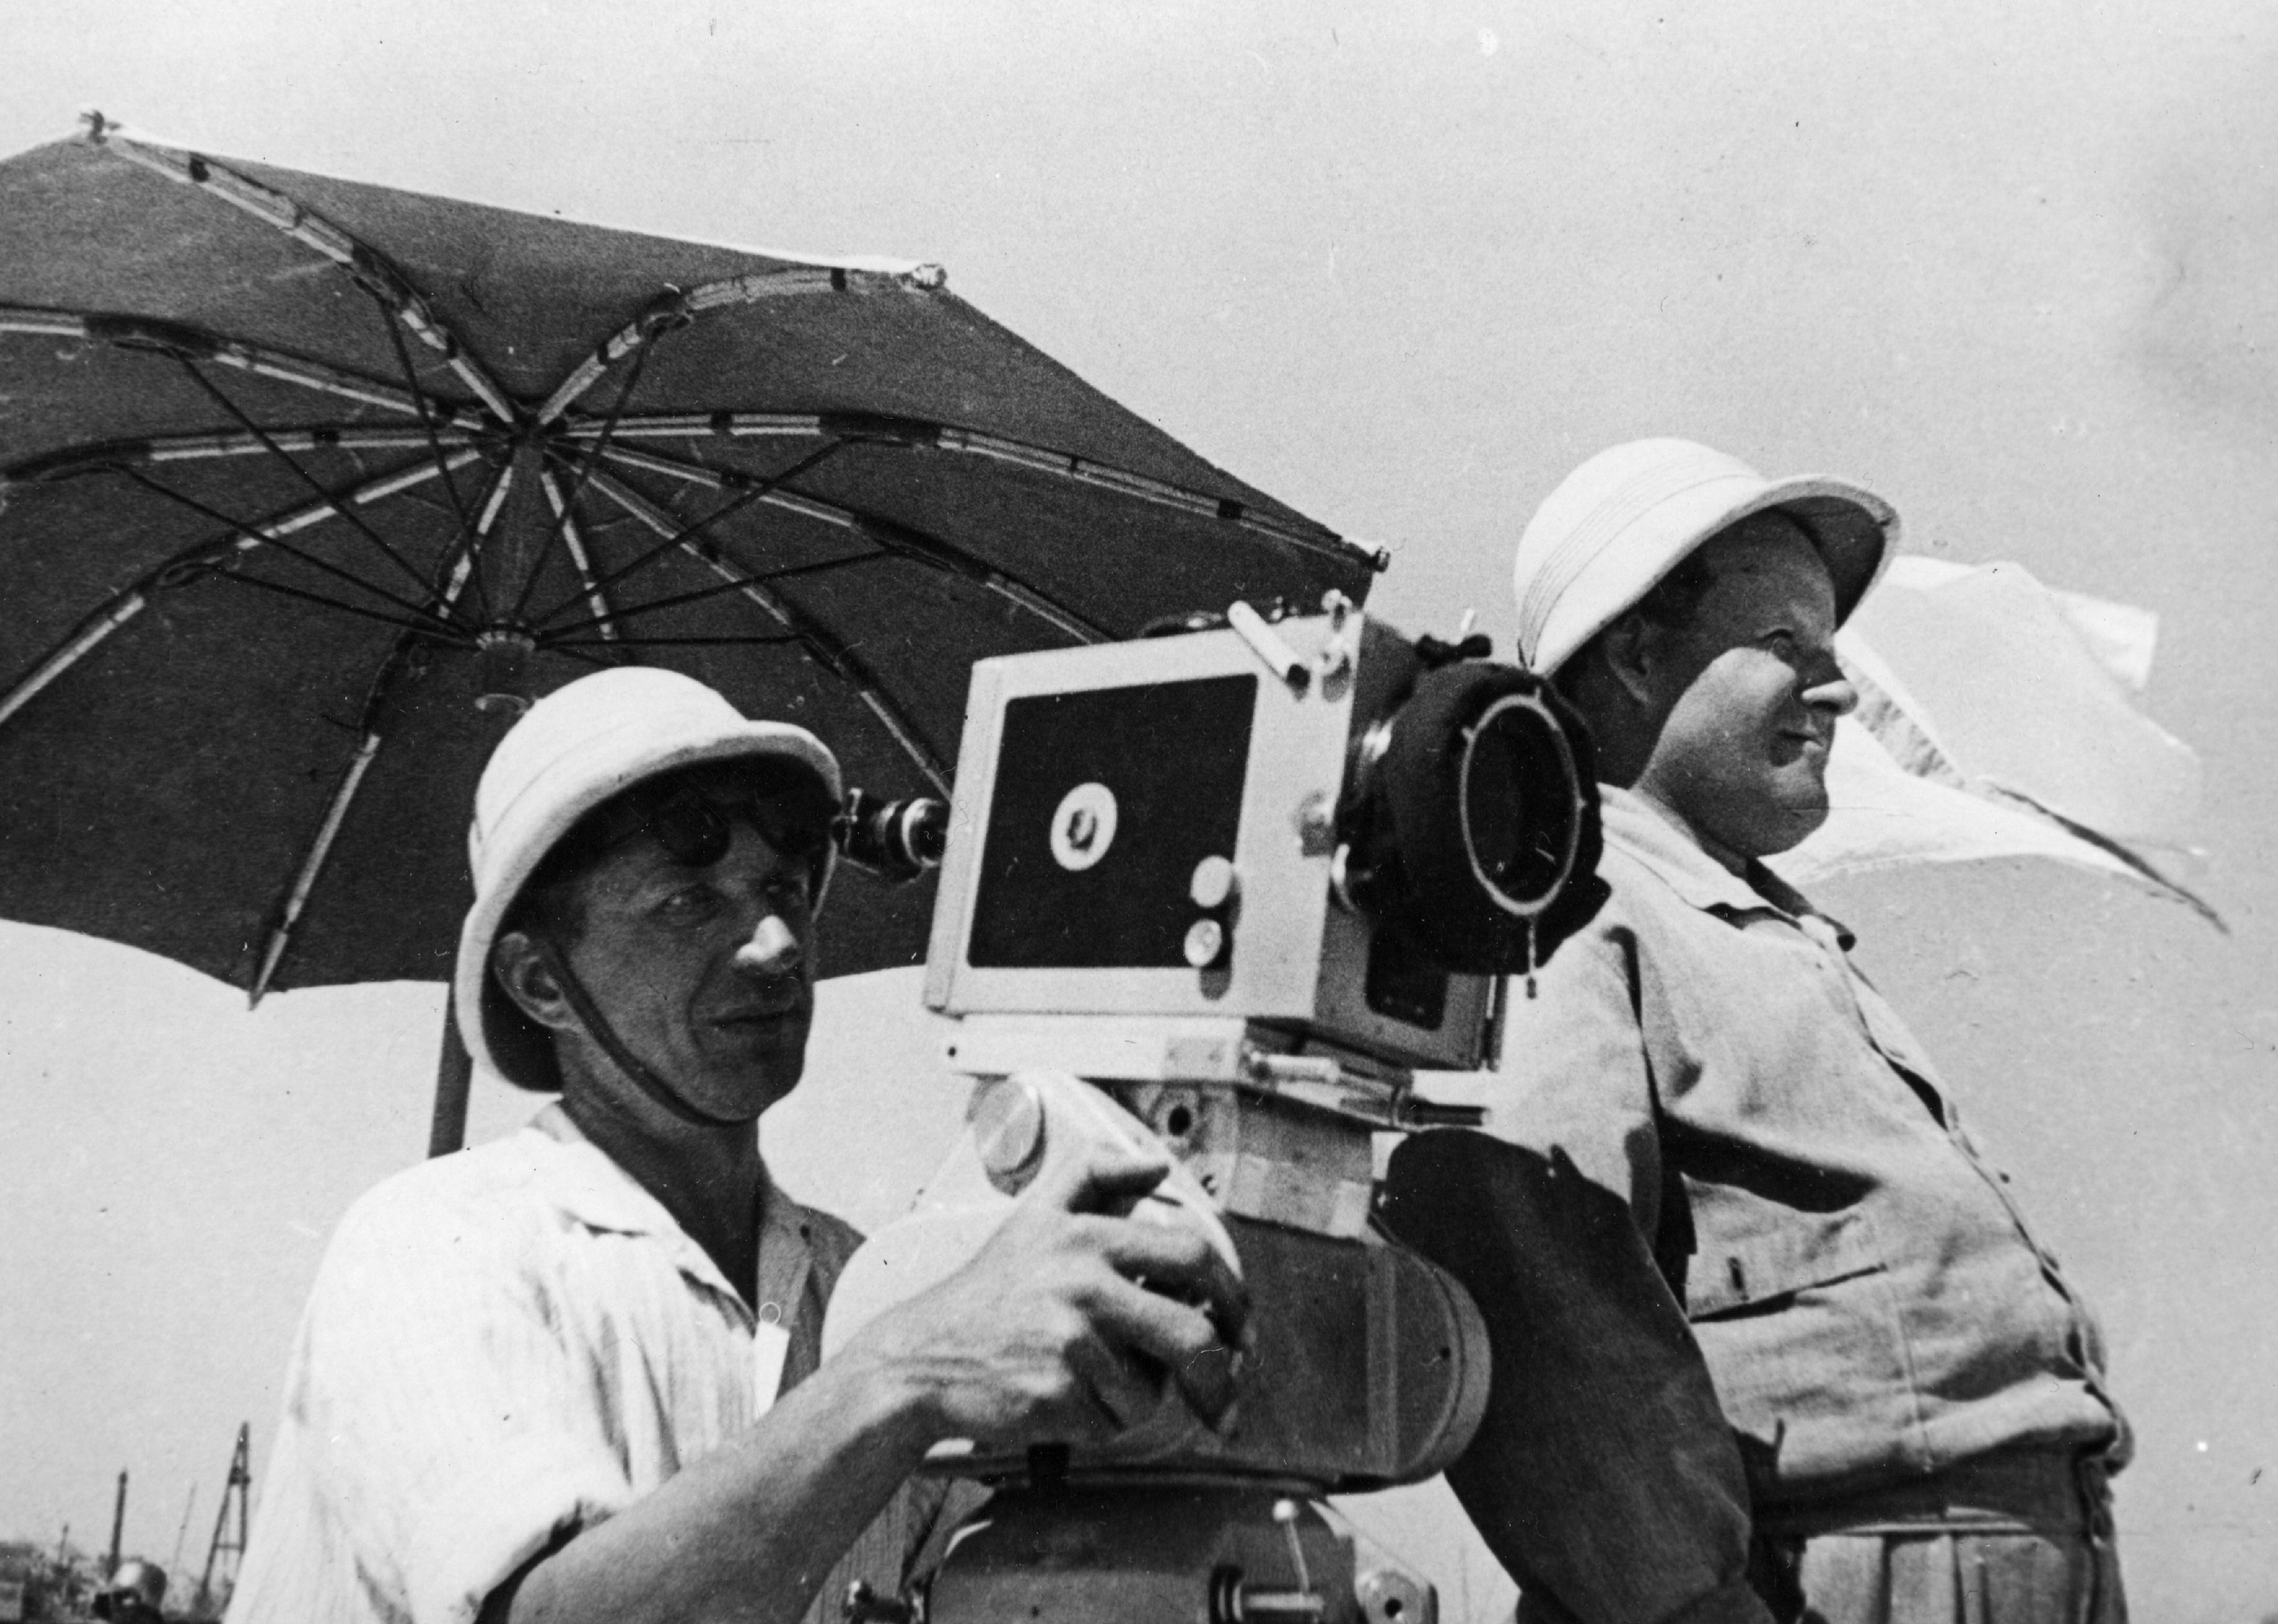 Sergei Eisenstein and his cinematographer E. Tisse shooting on location.